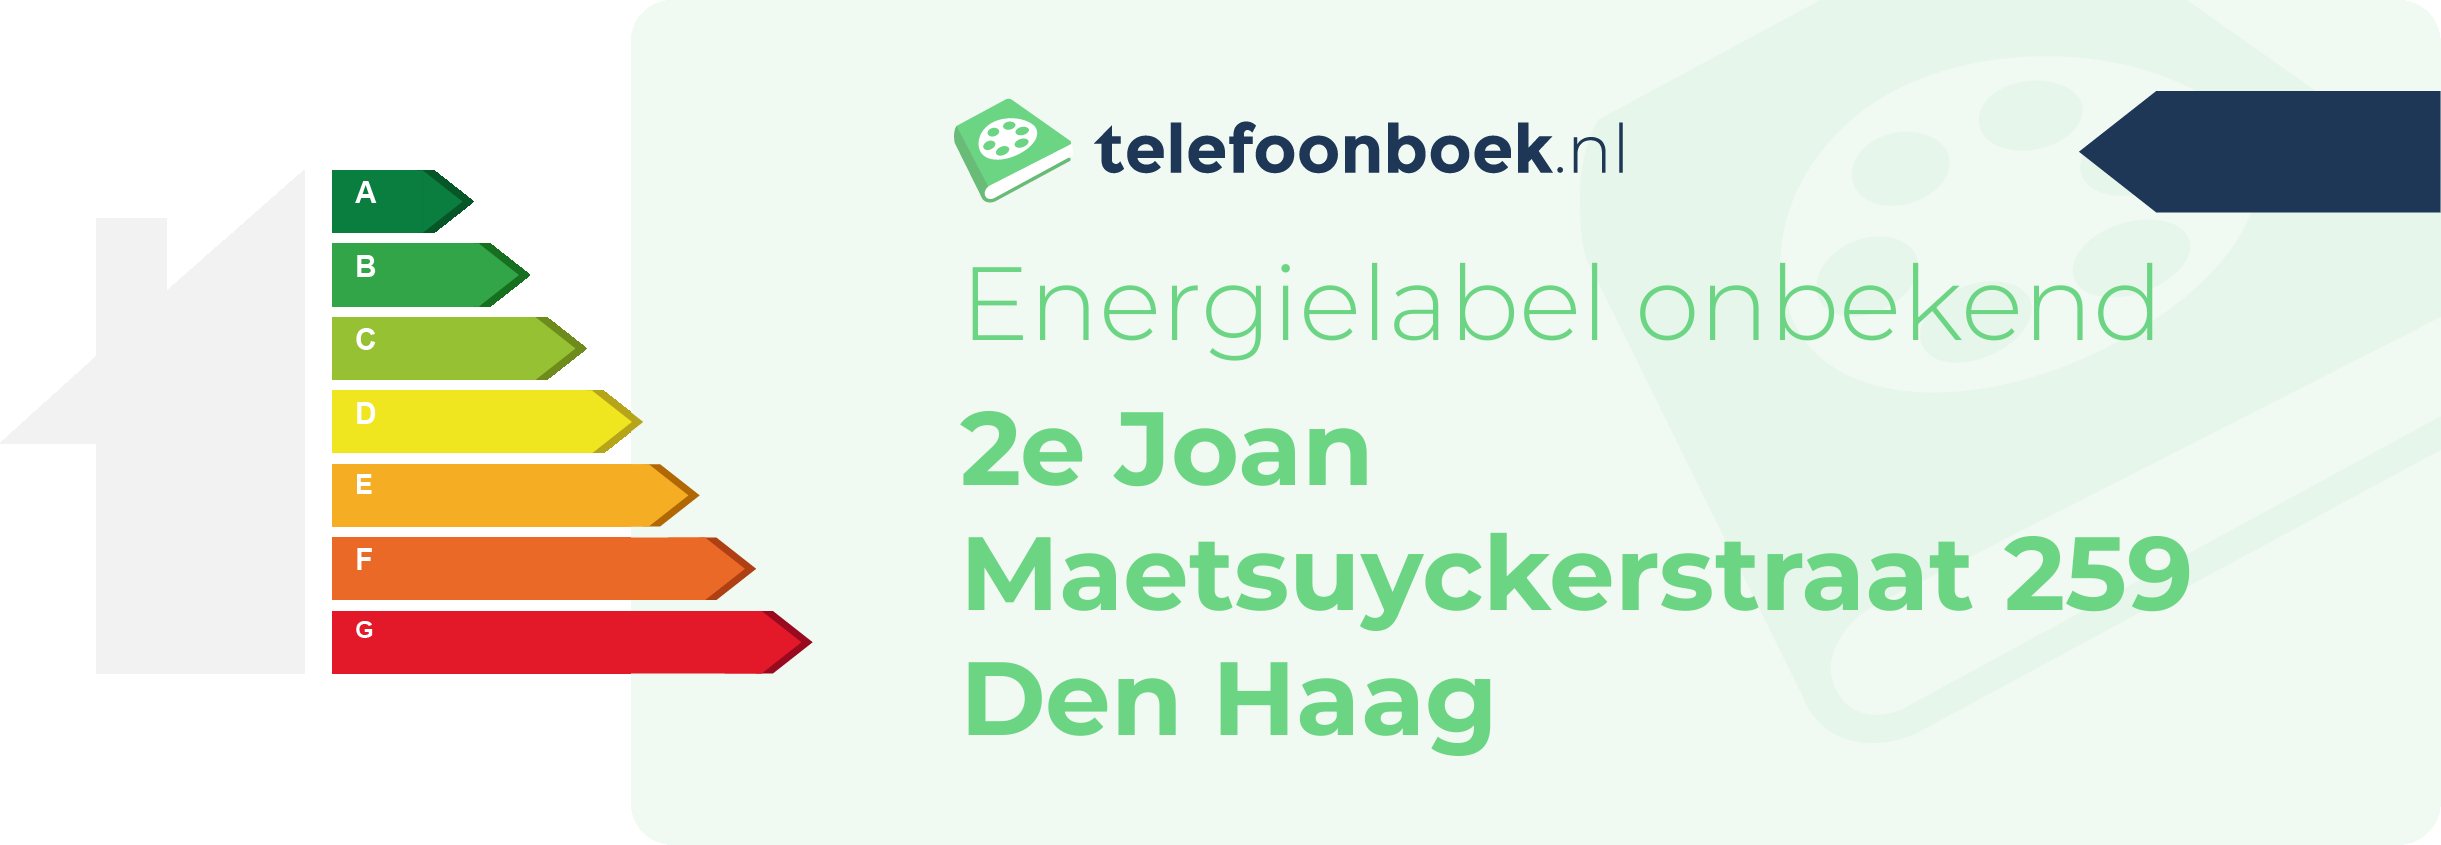 Energielabel 2e Joan Maetsuyckerstraat 259 Den Haag